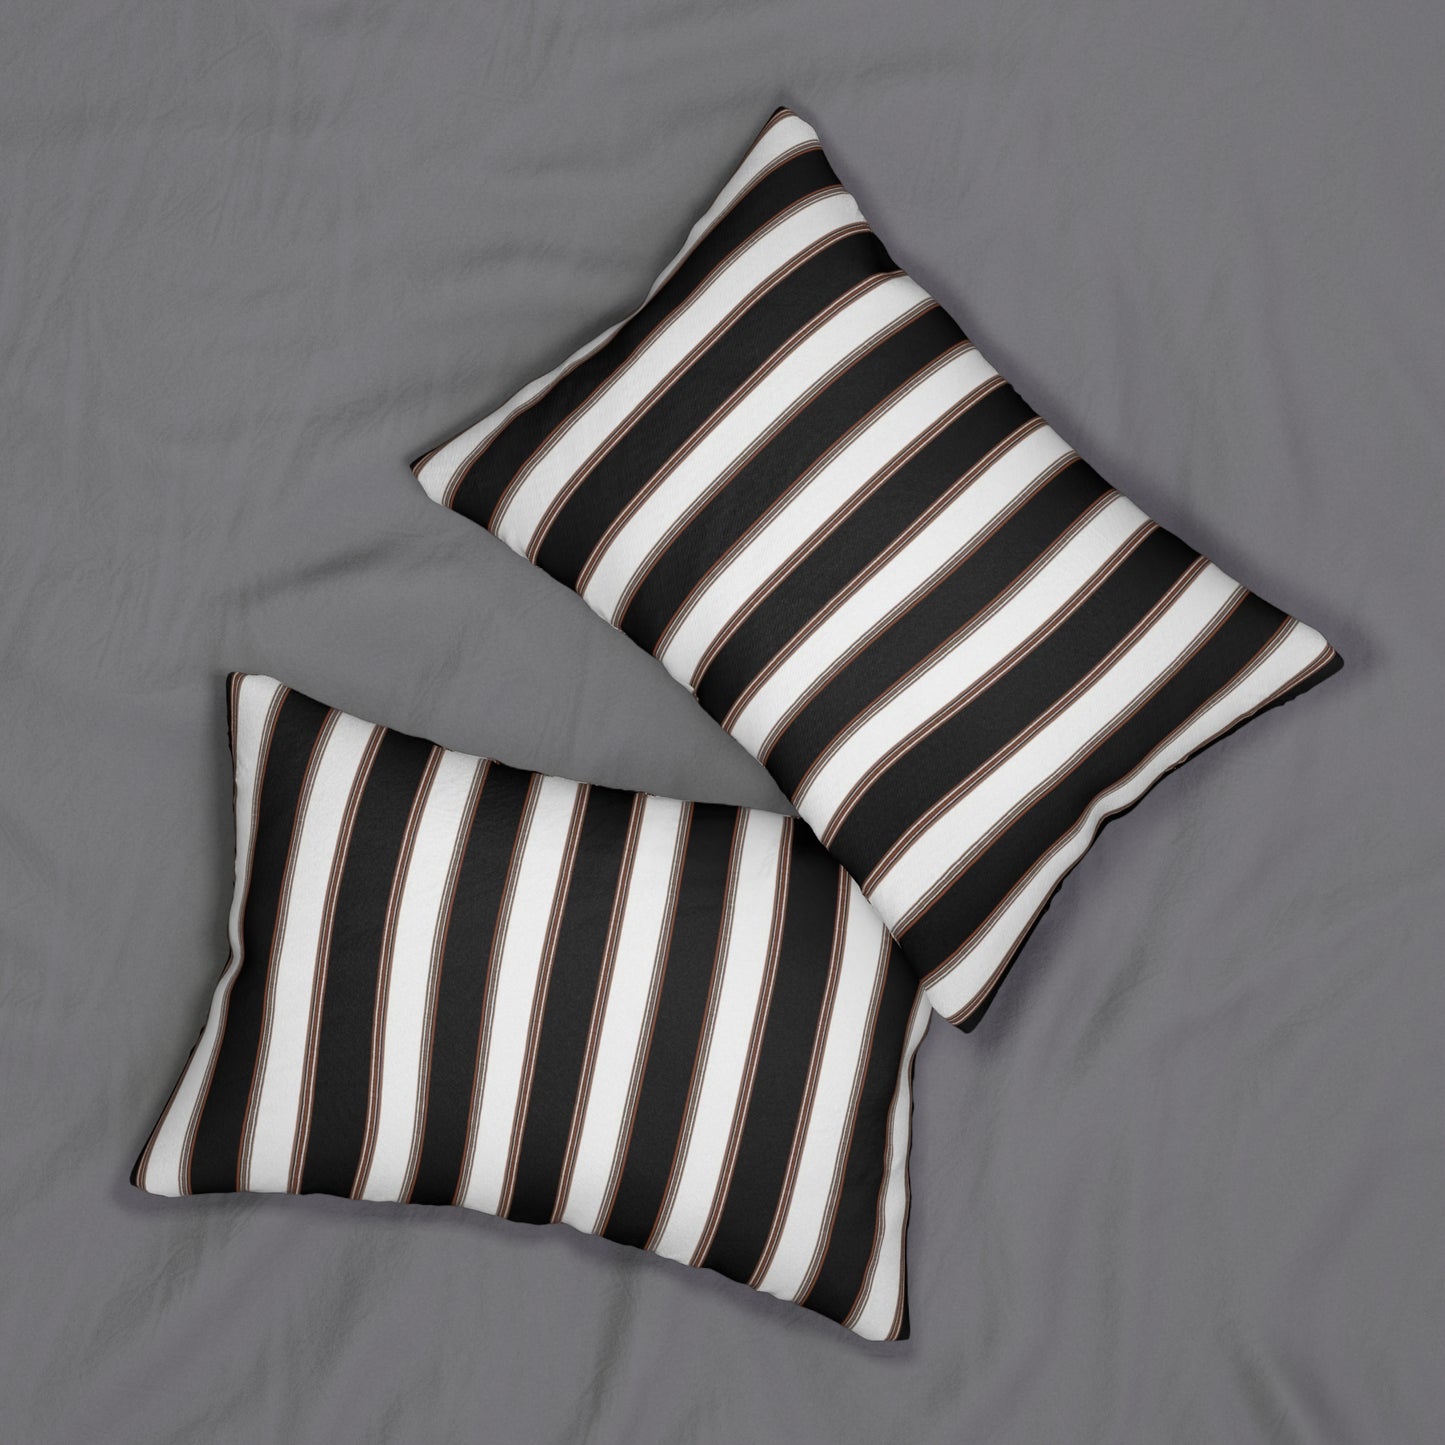 Black and White Stripe Lumbar Pillow